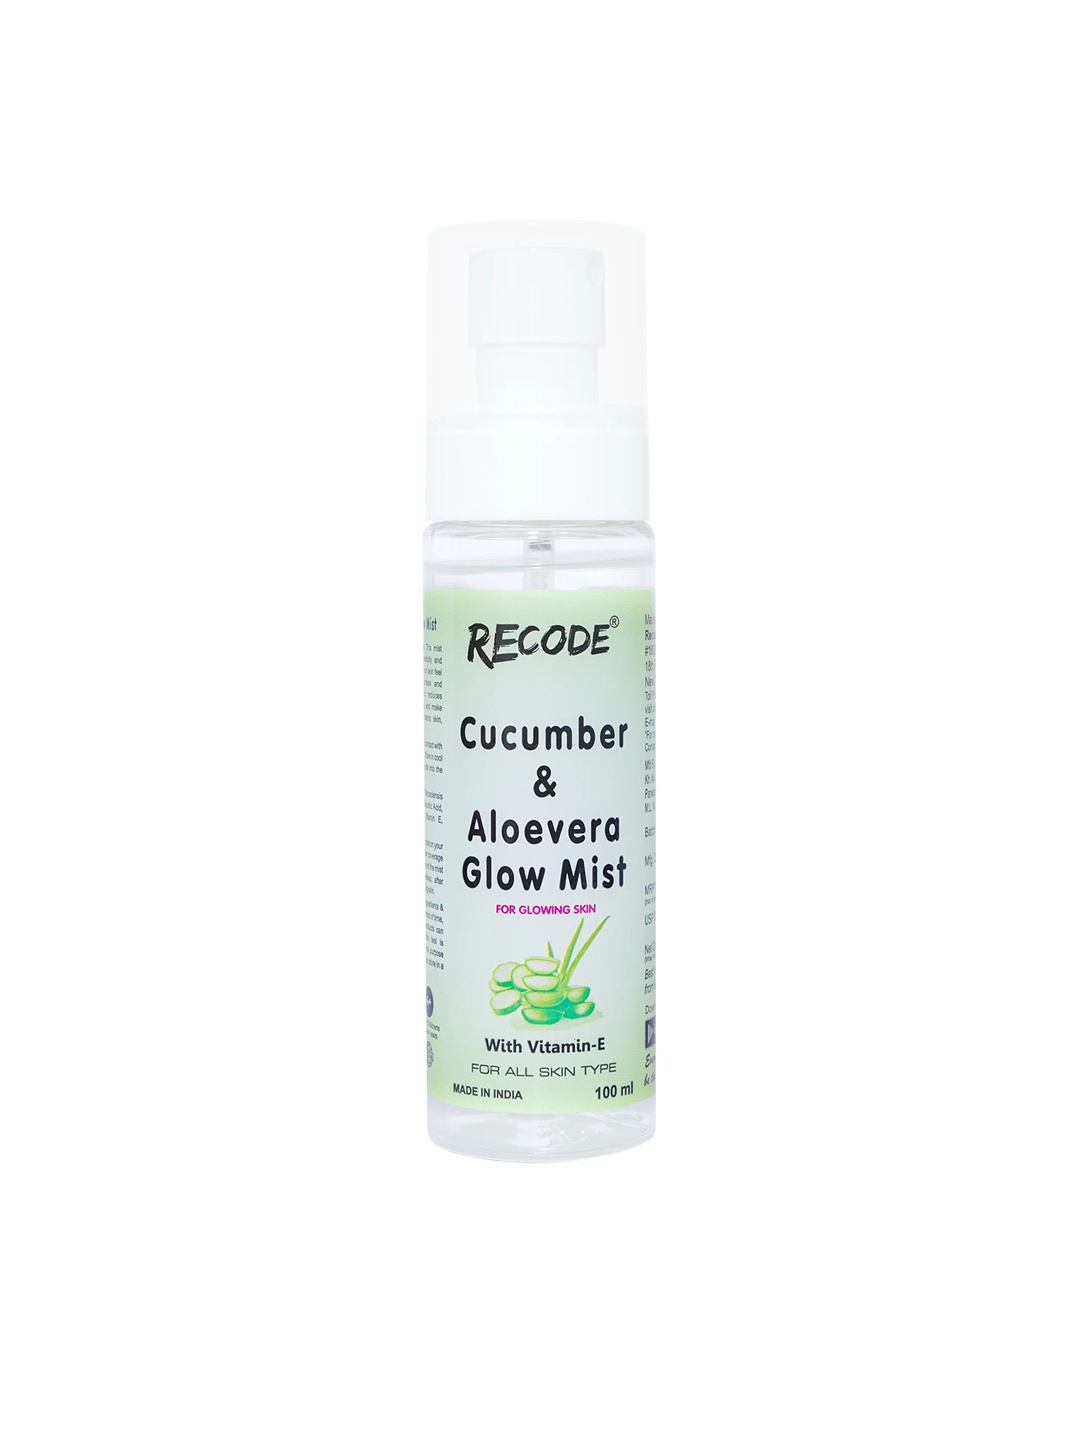 

Recode Cucumber & Aloevera Glow Mist with Vitamin E - 100 ml, Green